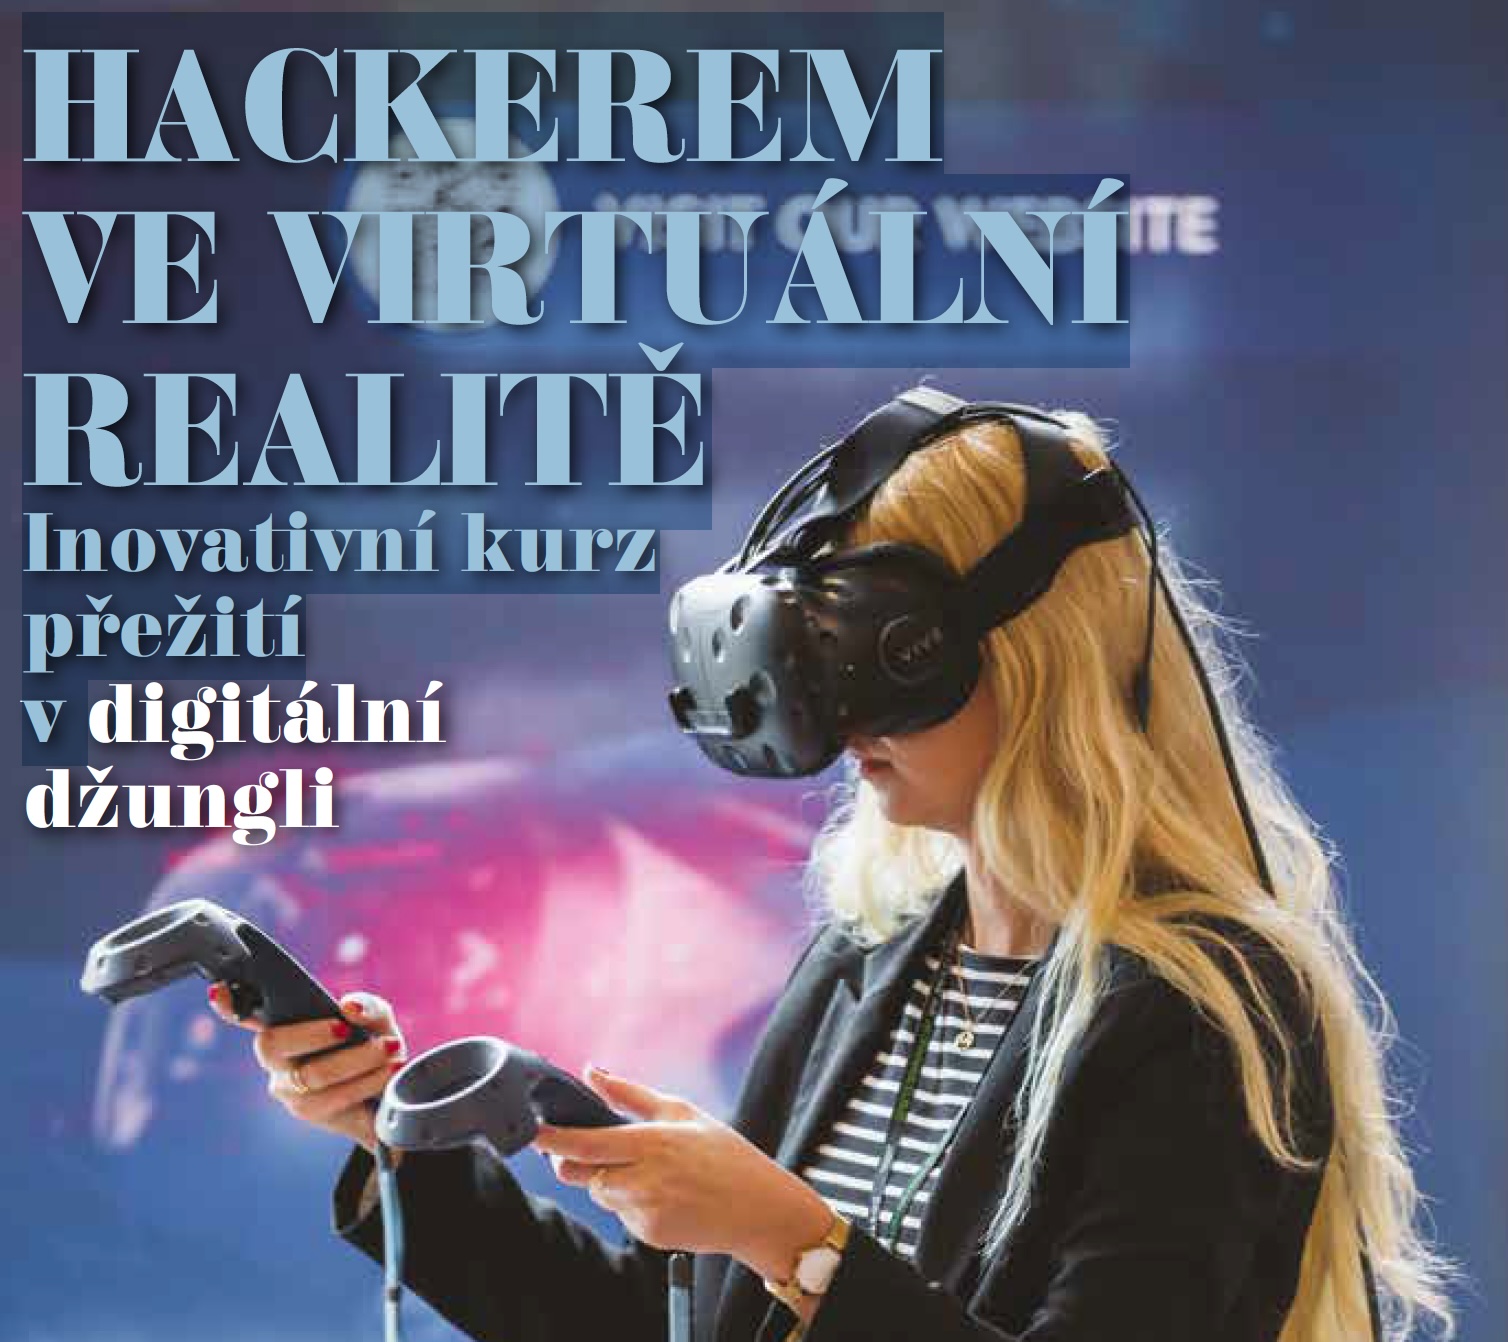 innovation-hackerem-ve-virtualni-realite-aneb-inovativni-kurz-preziti-v-digitalni-dzungli